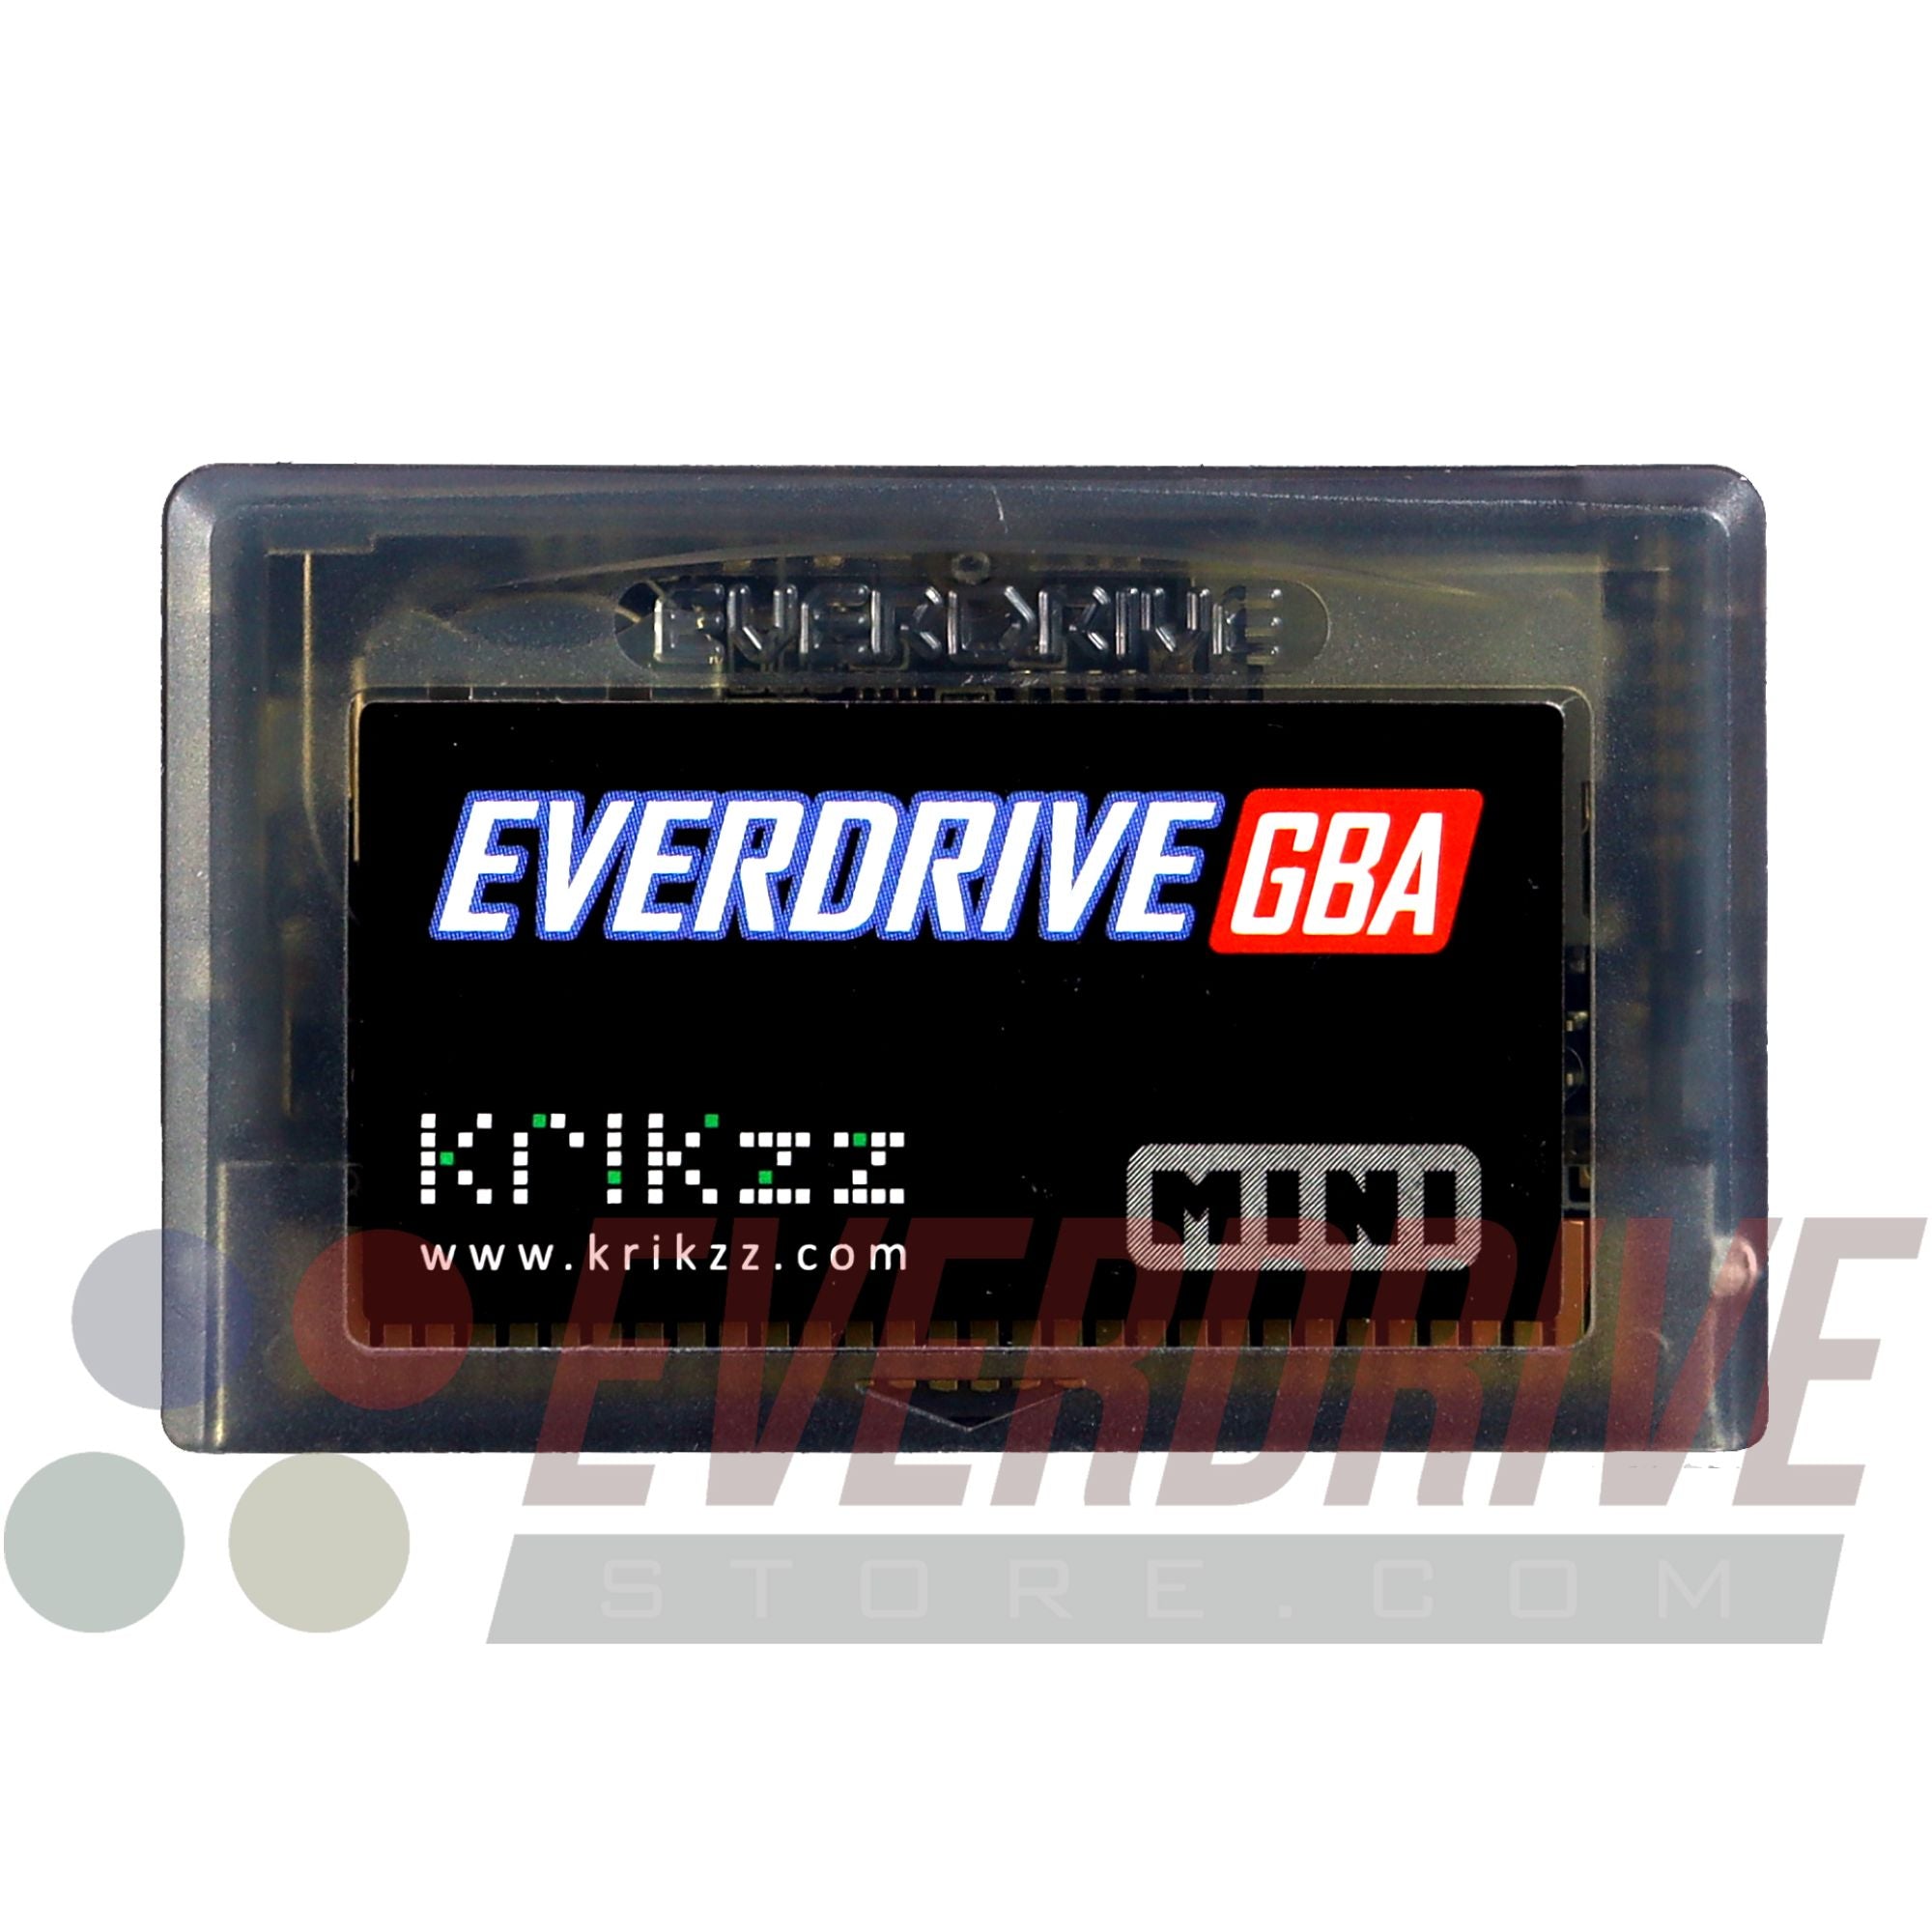 Everdrive GBA Mini – EverdriveStore.com